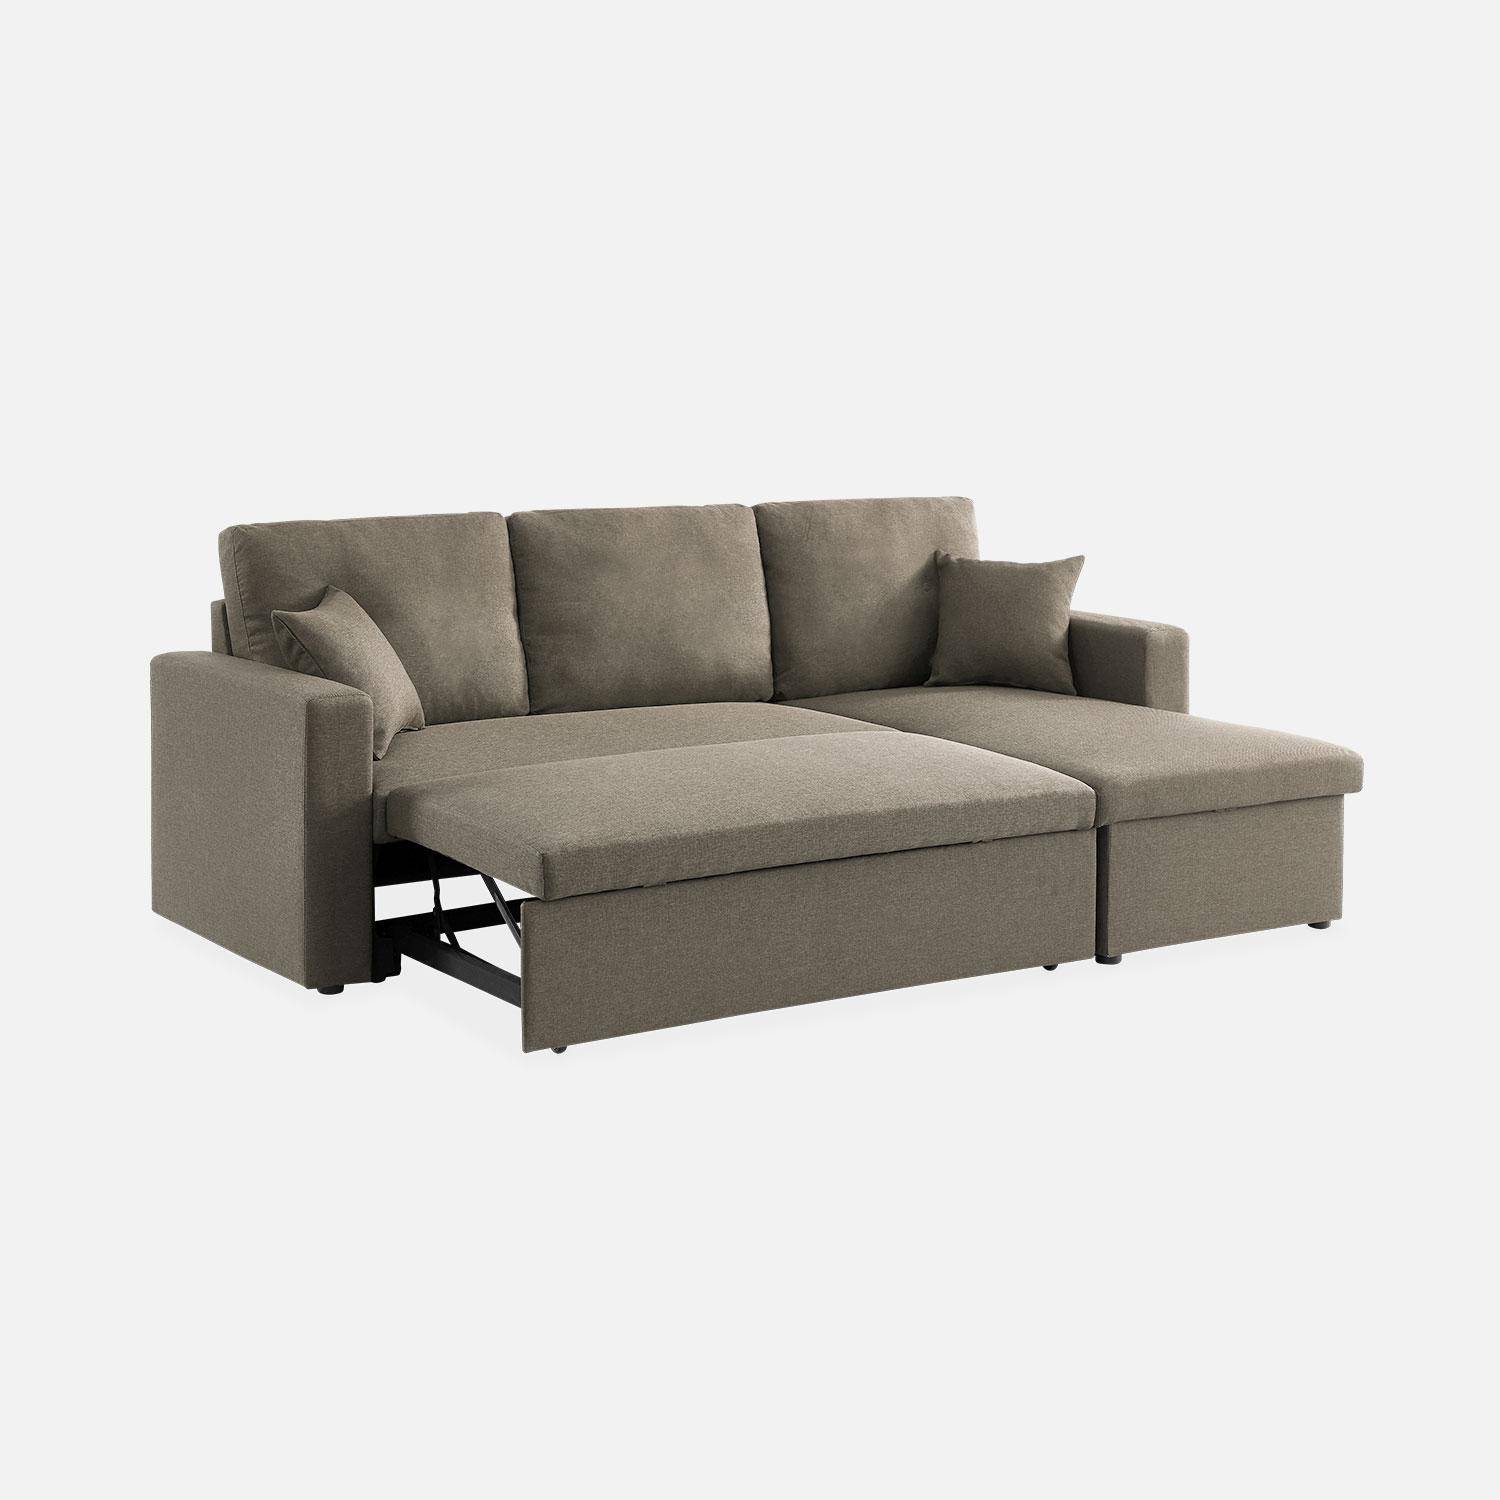 3-seater reversible brown corner sofa bed with storage box, brown, L219xD81xH68cm, IDA,sweeek,Photo9